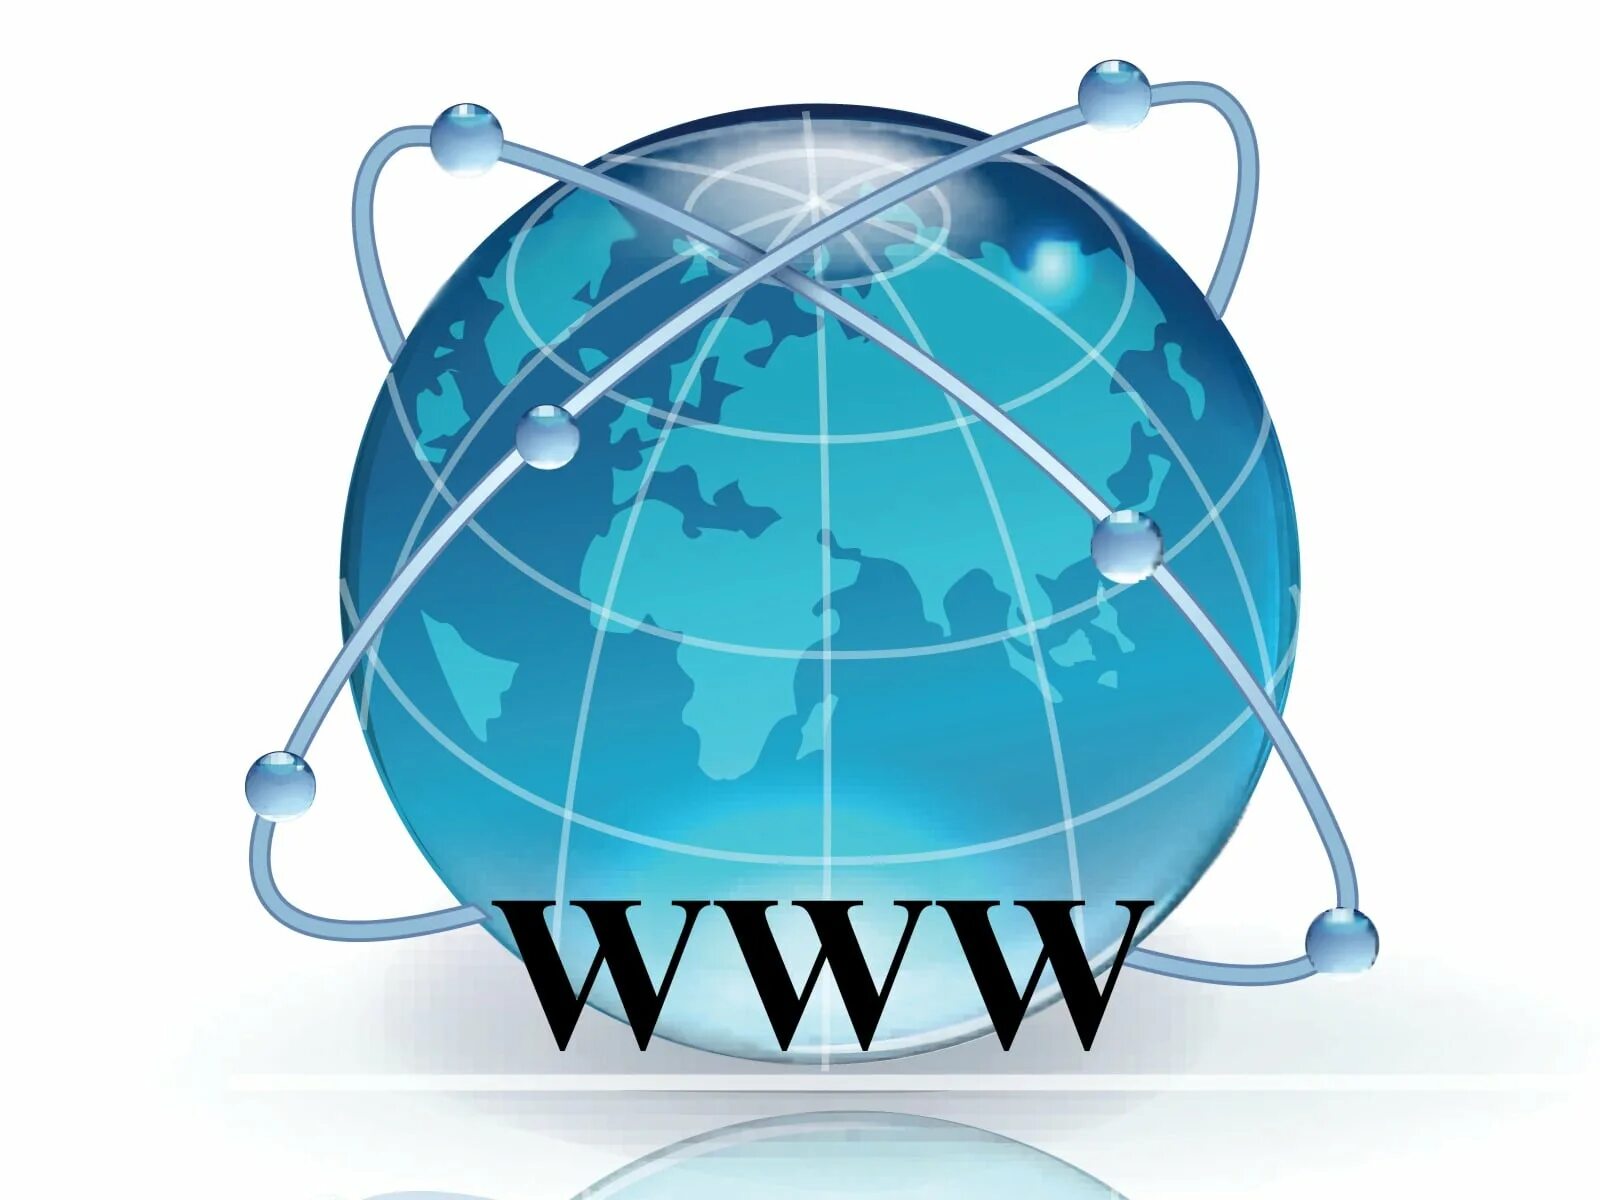 Сайт интернета http www. Всемирная паутина World wide web это. Всемирная паутина (World wide web, www);. Интернет логотип. Значок сети интернет.